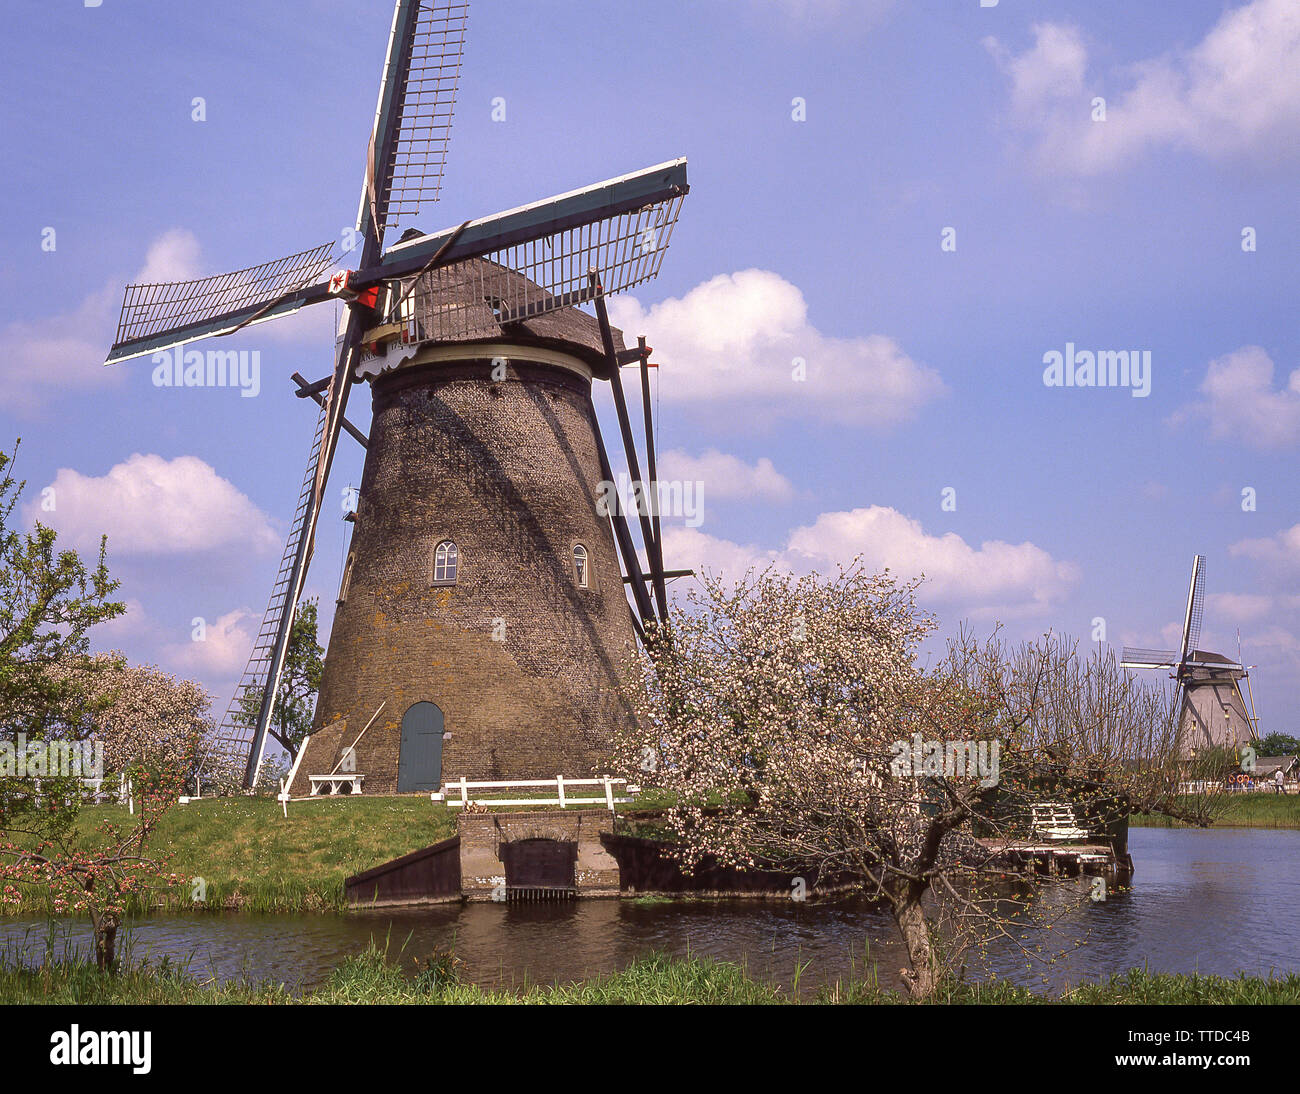 The Old Windmills at Kinderdijk, Kinderdijk, Zuid-Holland, Kingdom of the Netherlands Stock Photo